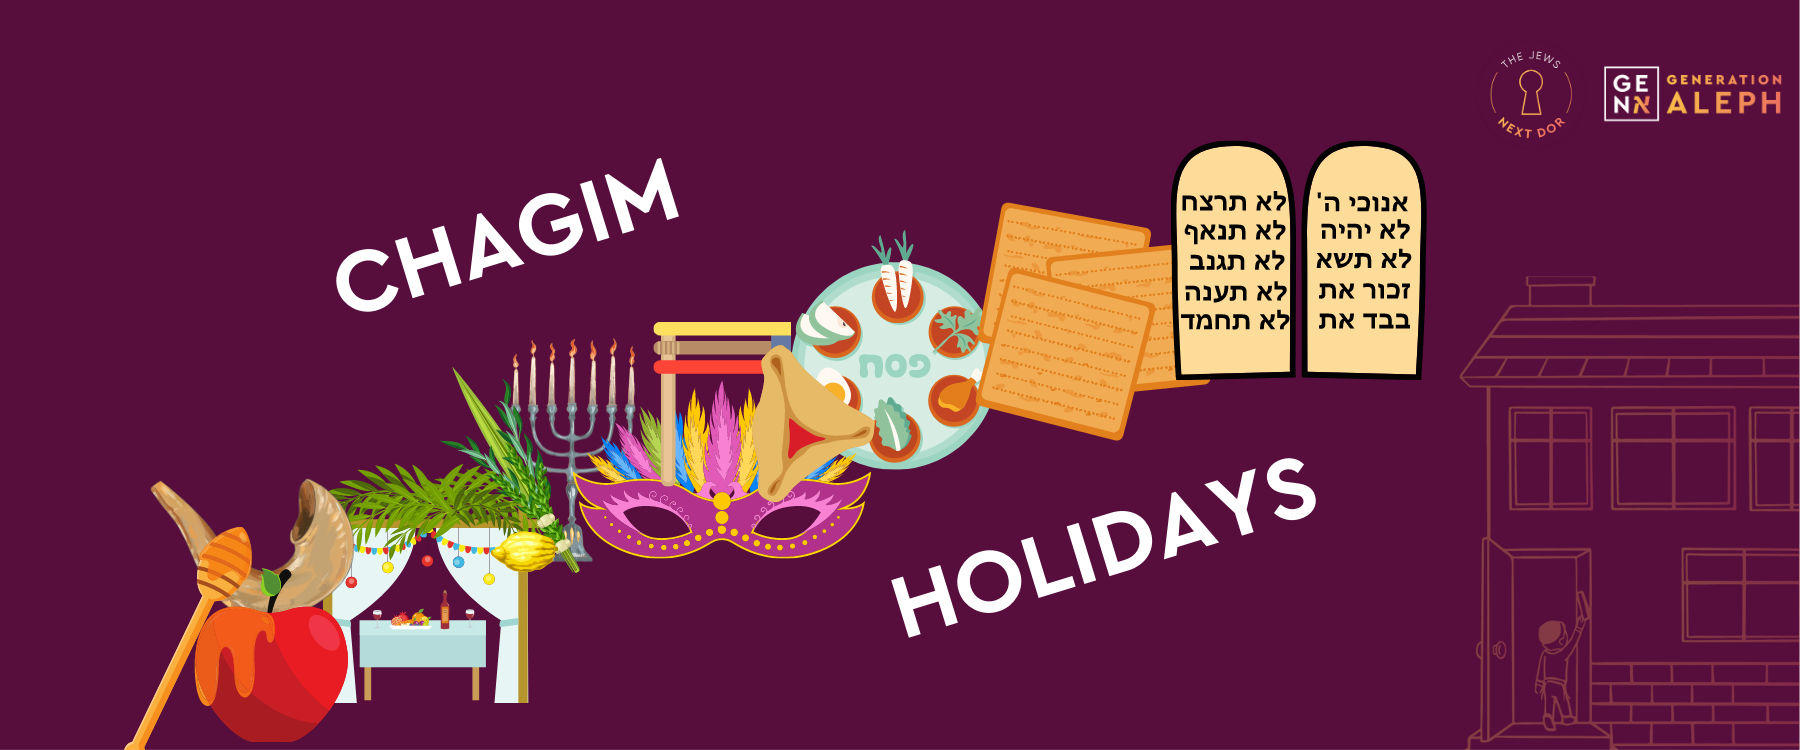 Chagim/Holidays